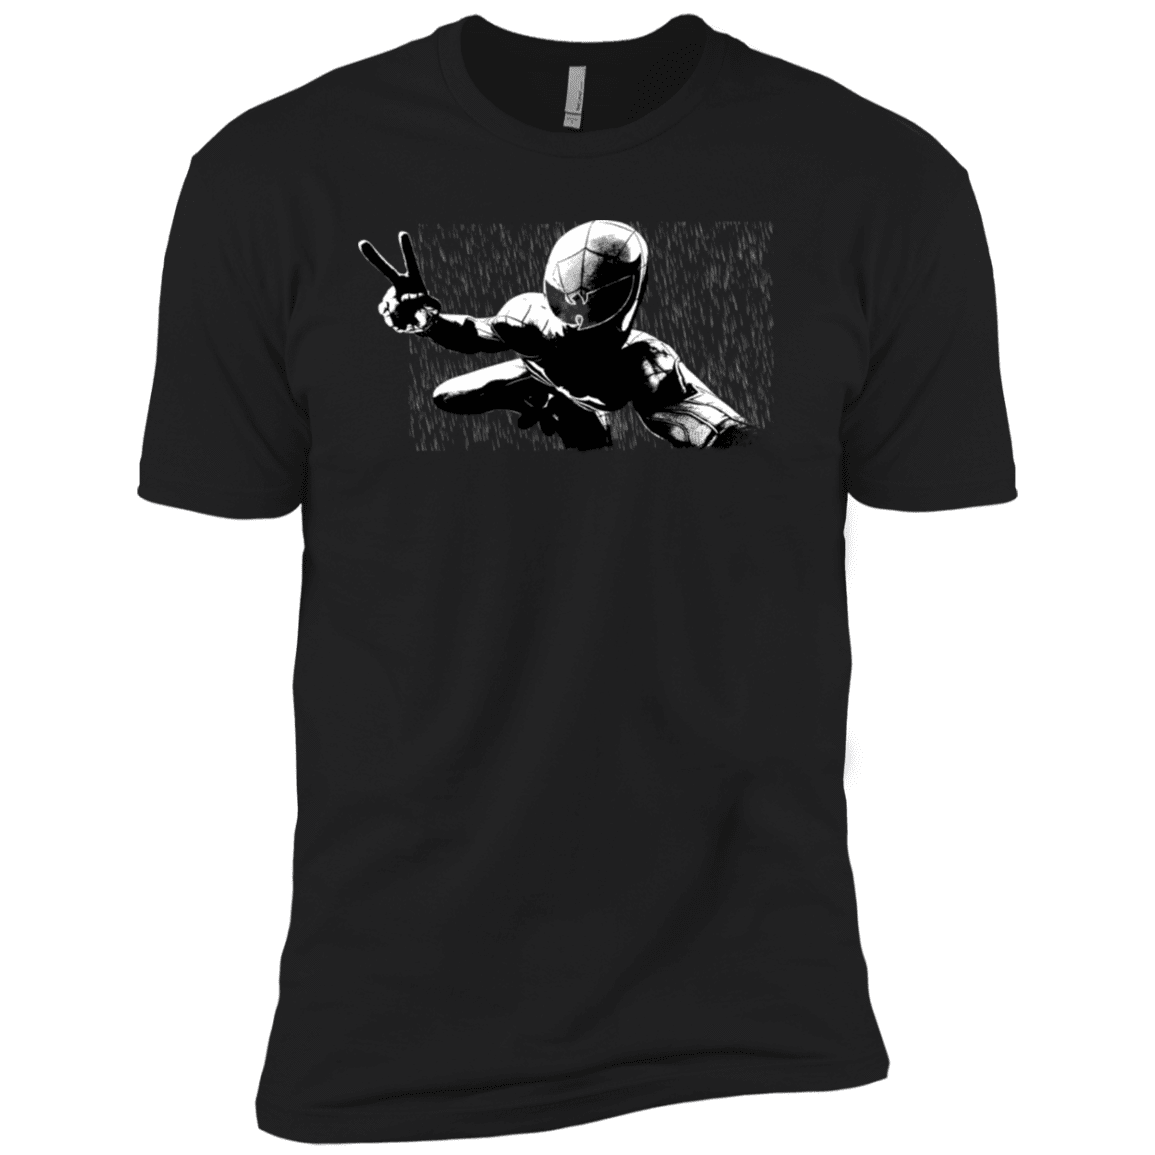 T-Shirts Black / X-Small Its Yourz Men's Premium T-Shirt